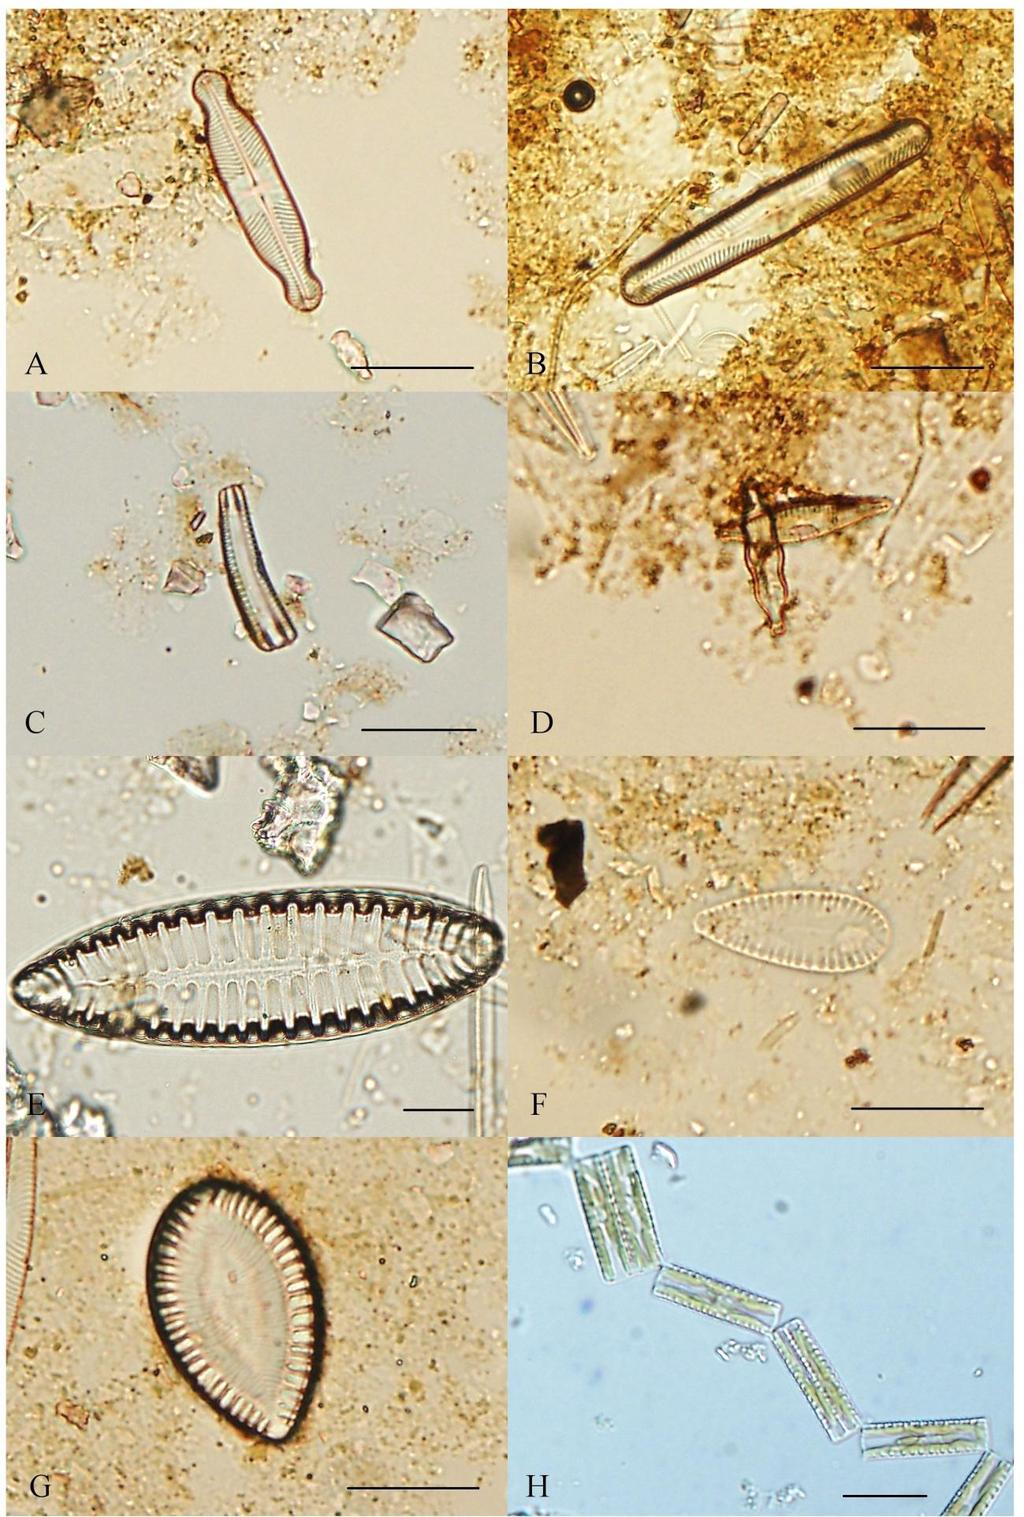 Příloha 15: Fotodokumentace vybraných zástupců Bacillariophyceae IV (A Pinnularia lundii, B Pinnularia stomatophora, C Rhoicosphenia